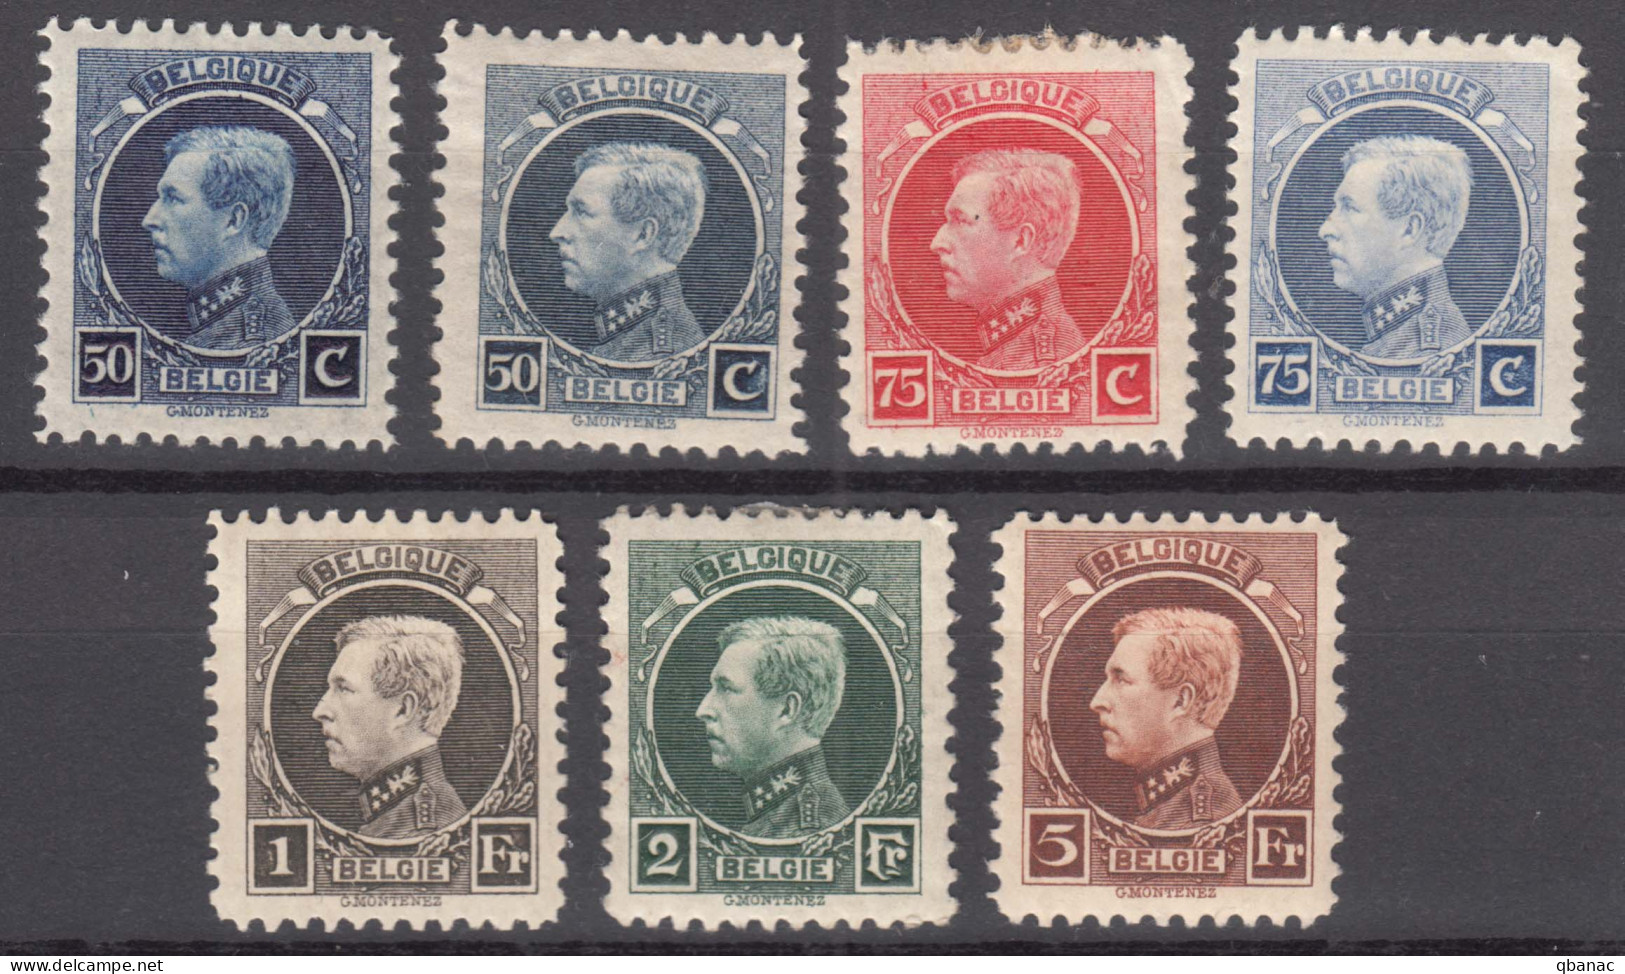 Belgium 1921/1922/1924 Small Montenez, Mint Hinged - 1921-1925 Petit Montenez